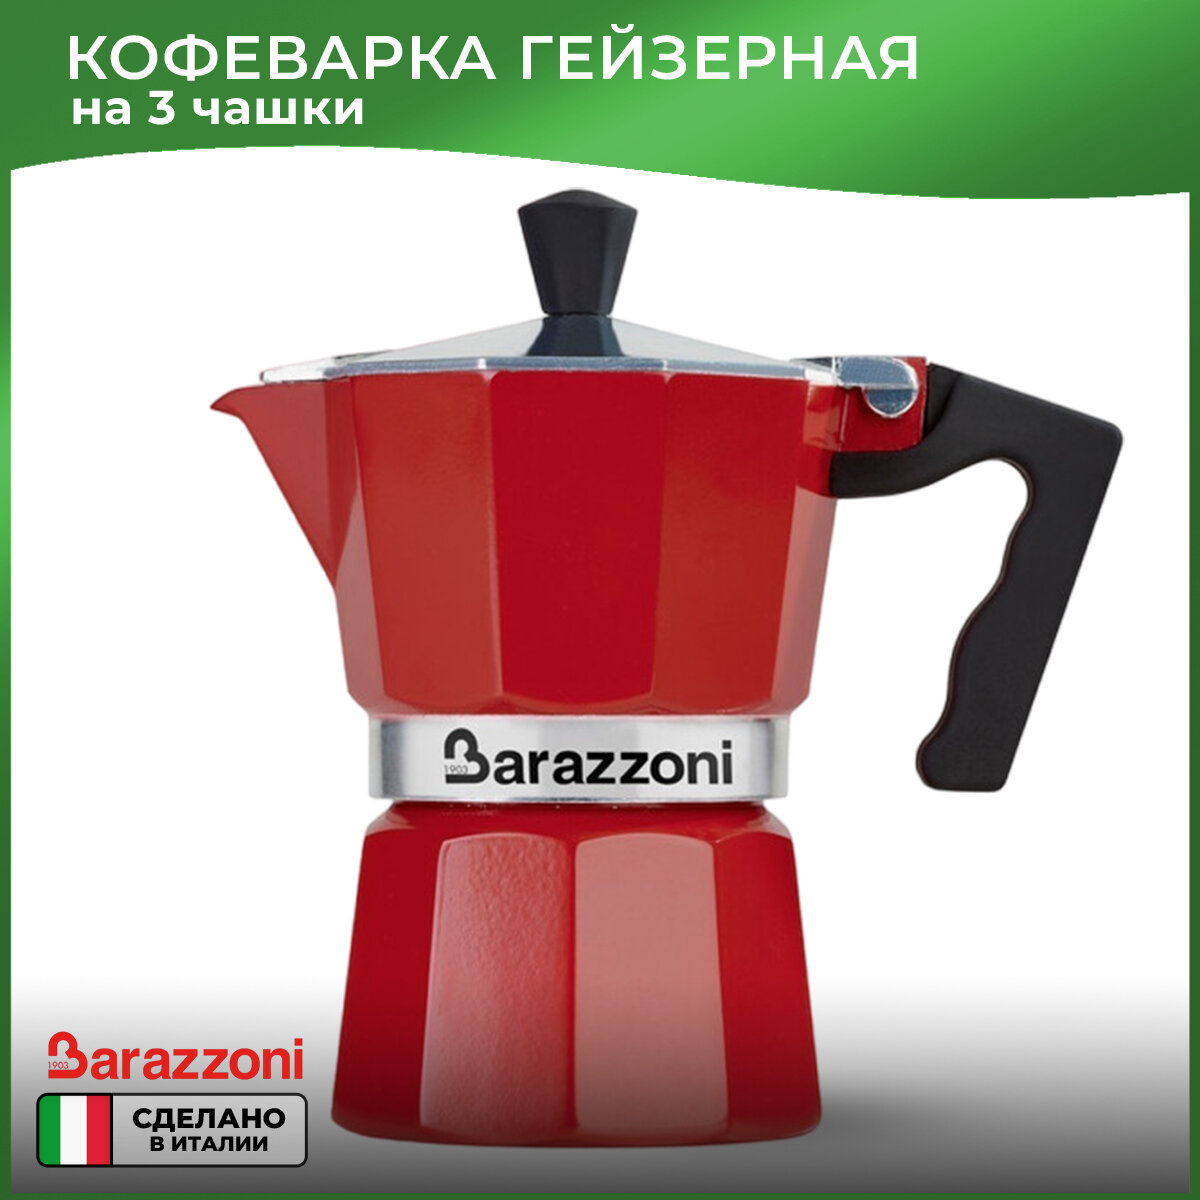 Гейзерная кофеварка Barazzoni Alluminium Red на 3 чашки, красная